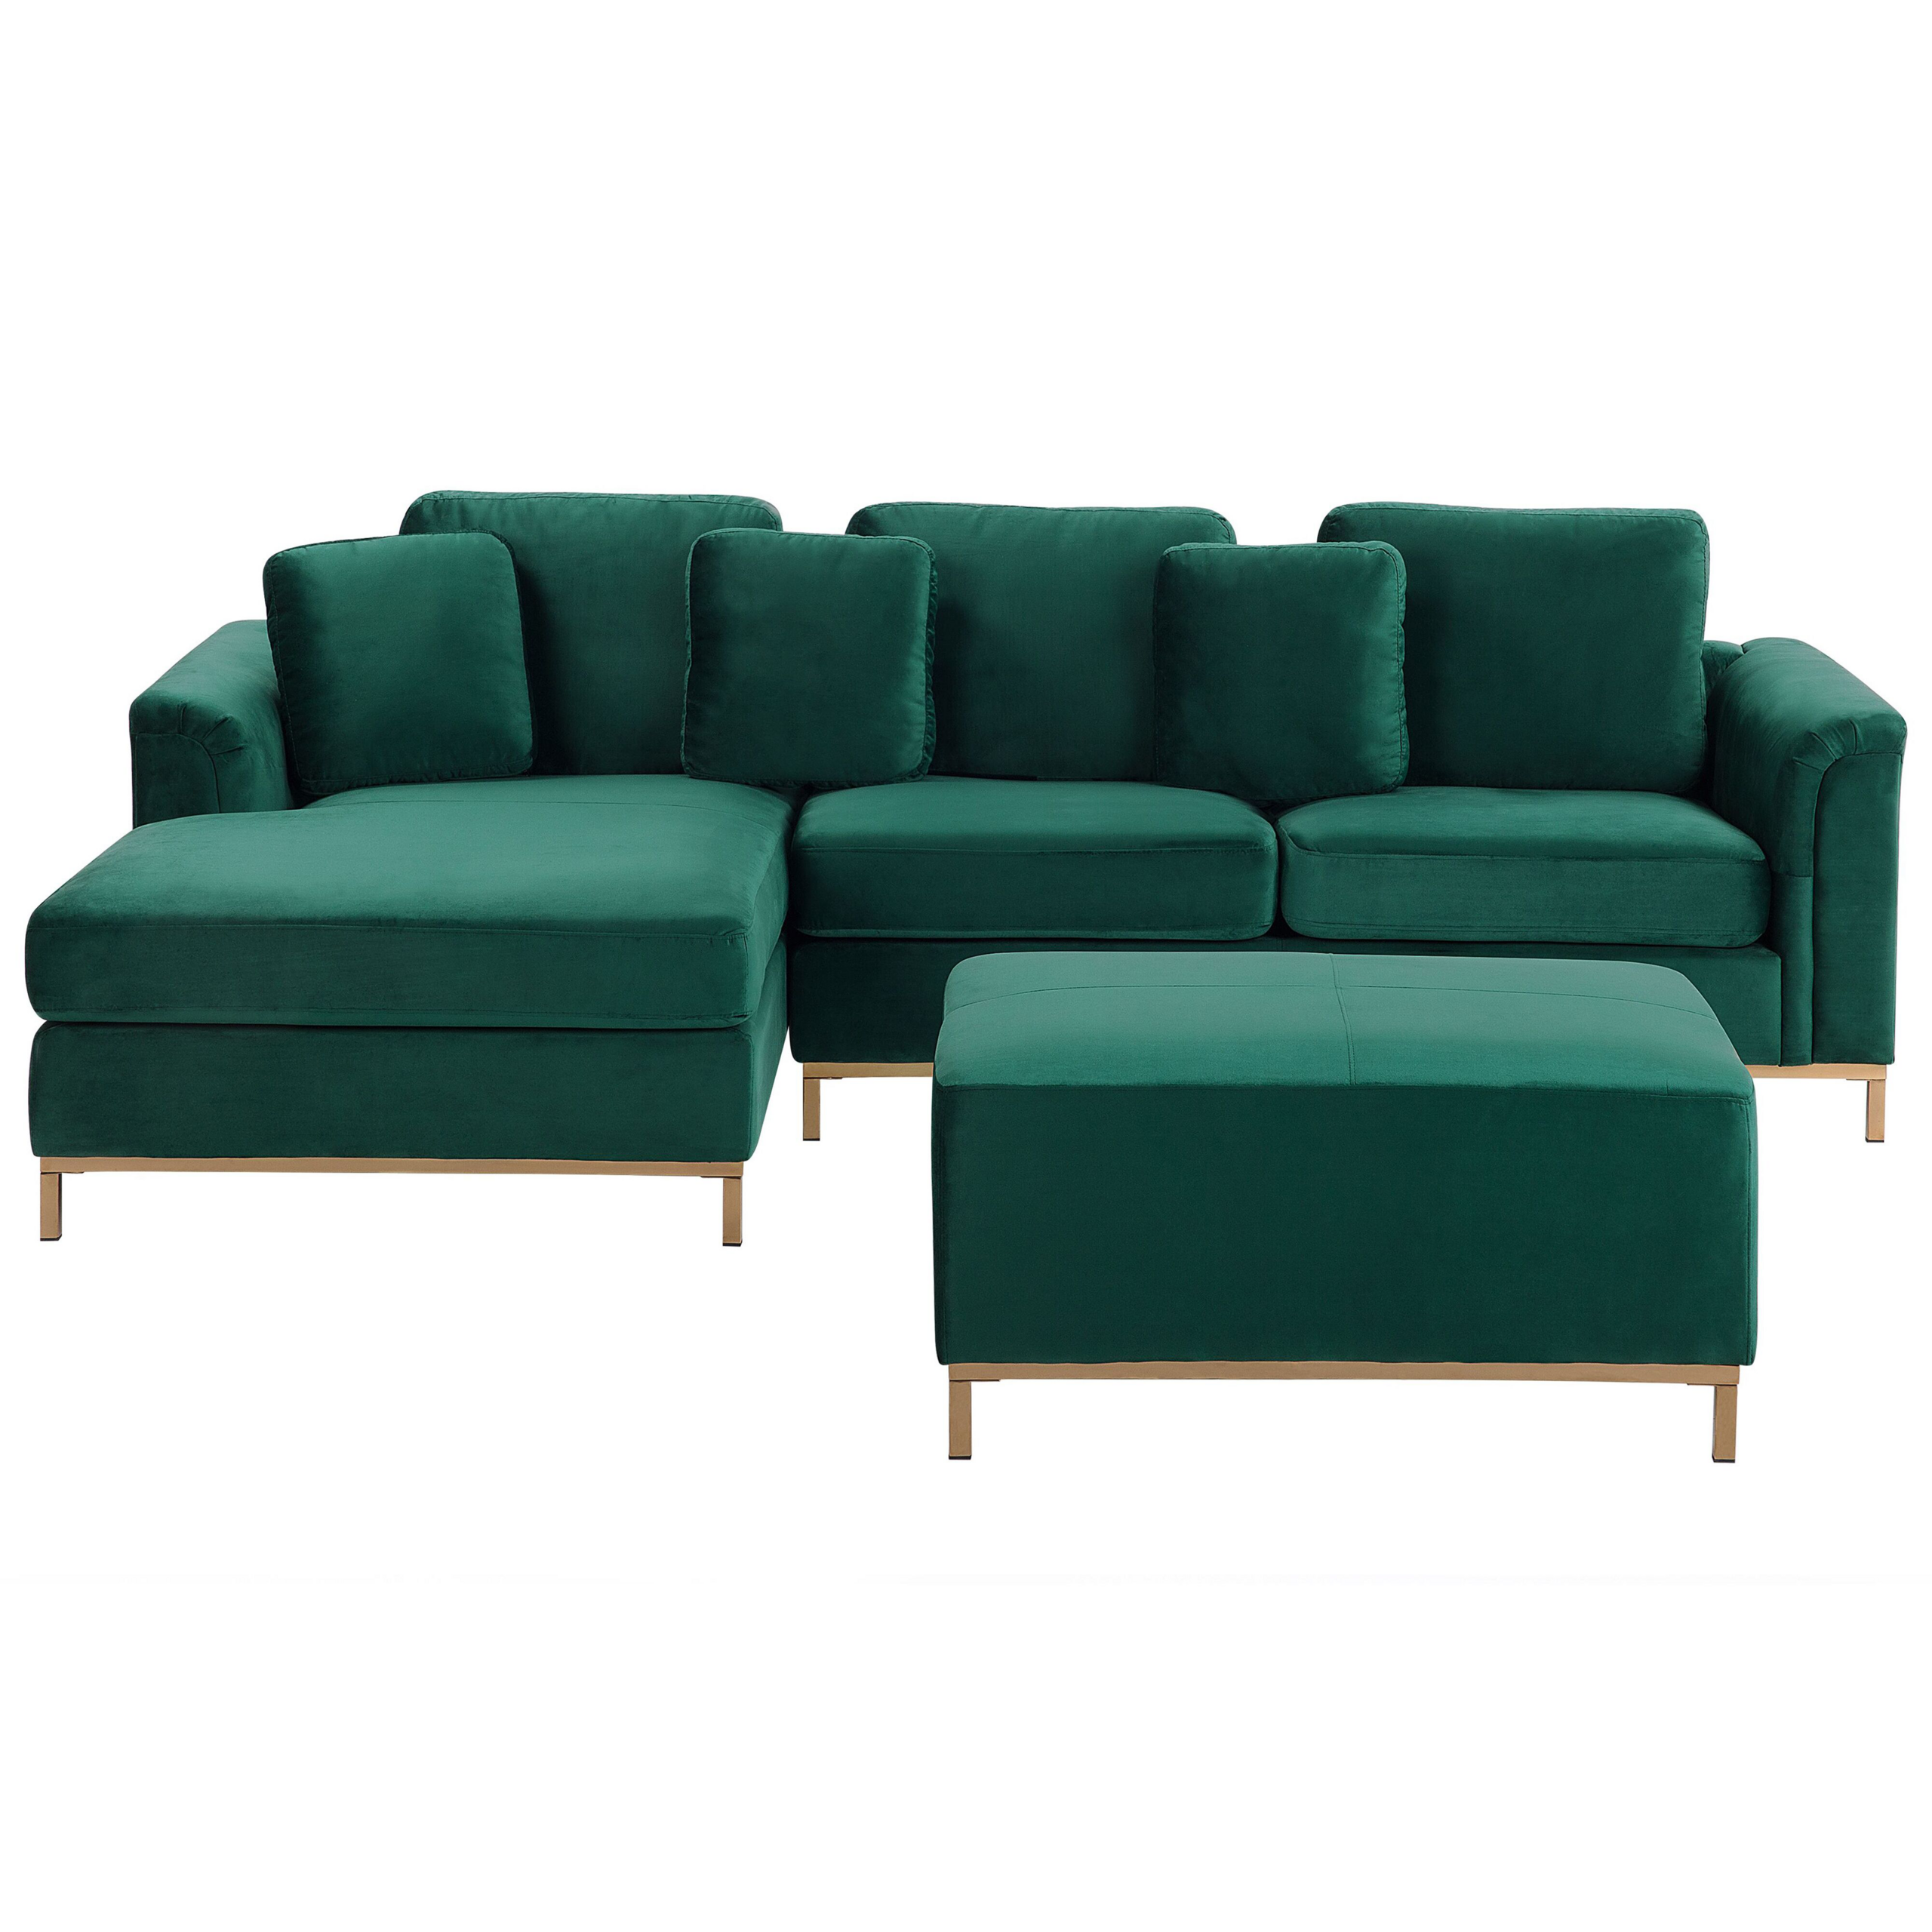 Beliani Corner Sofa Green Velvet Upholstered with Ottoman L-shaped Right Hand Orientation